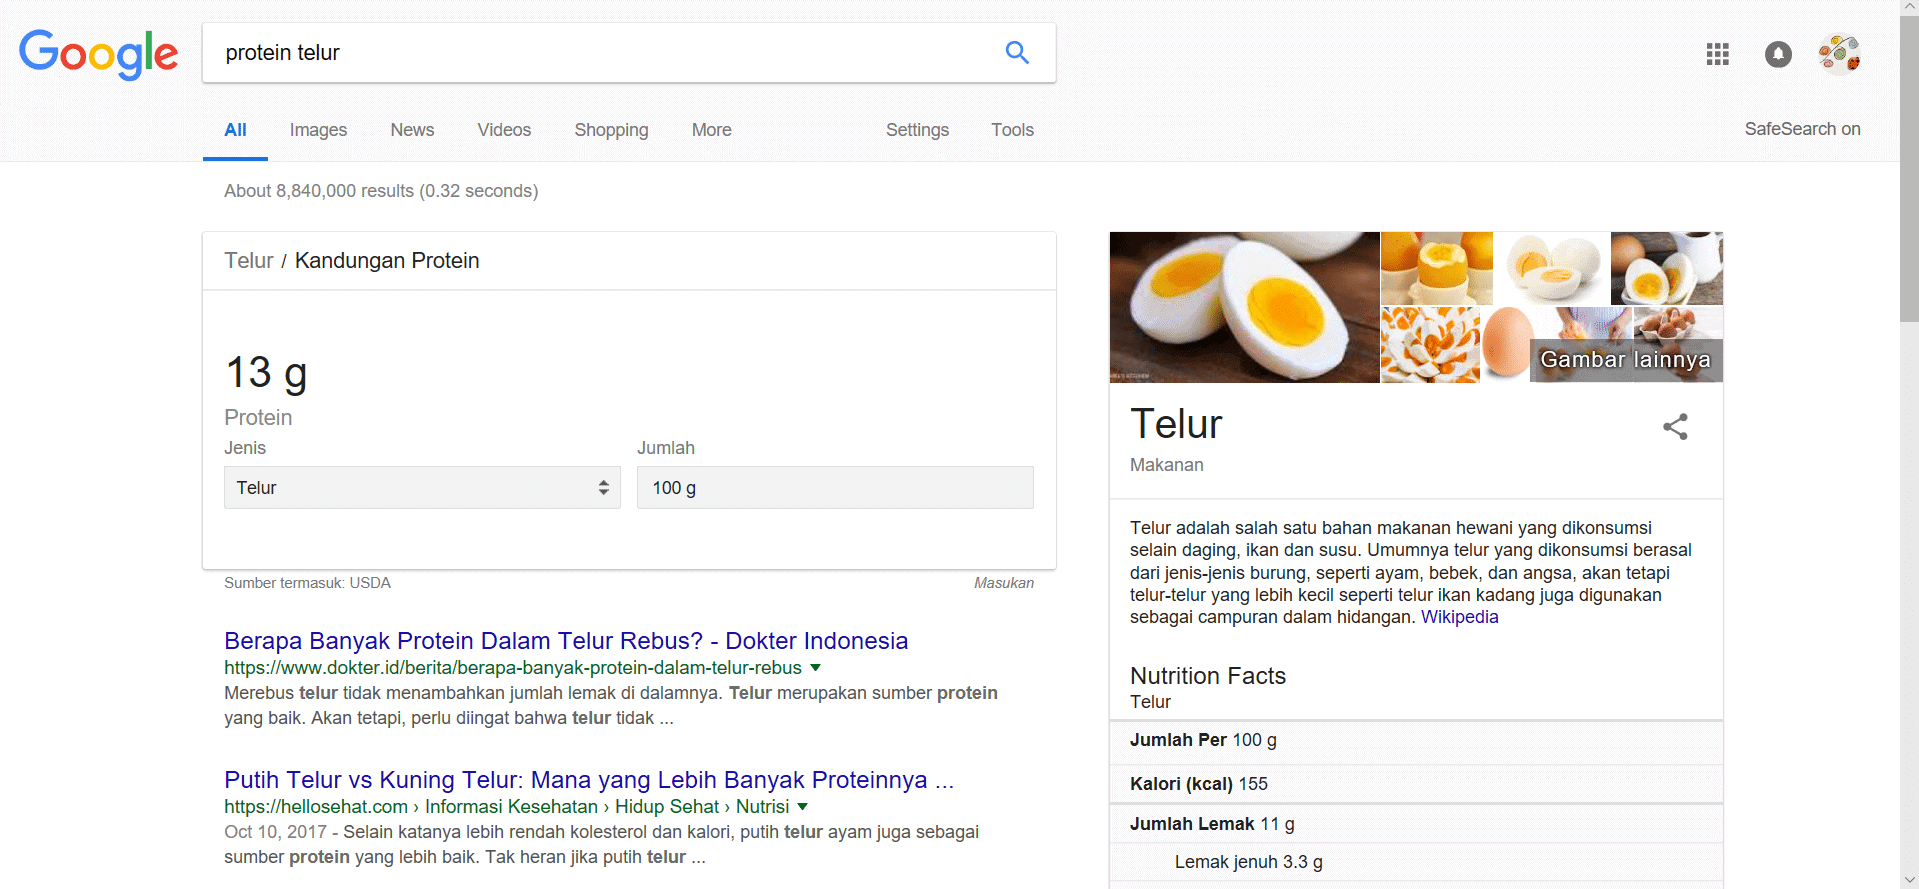 Penggunaan Google untuk menyusun menu